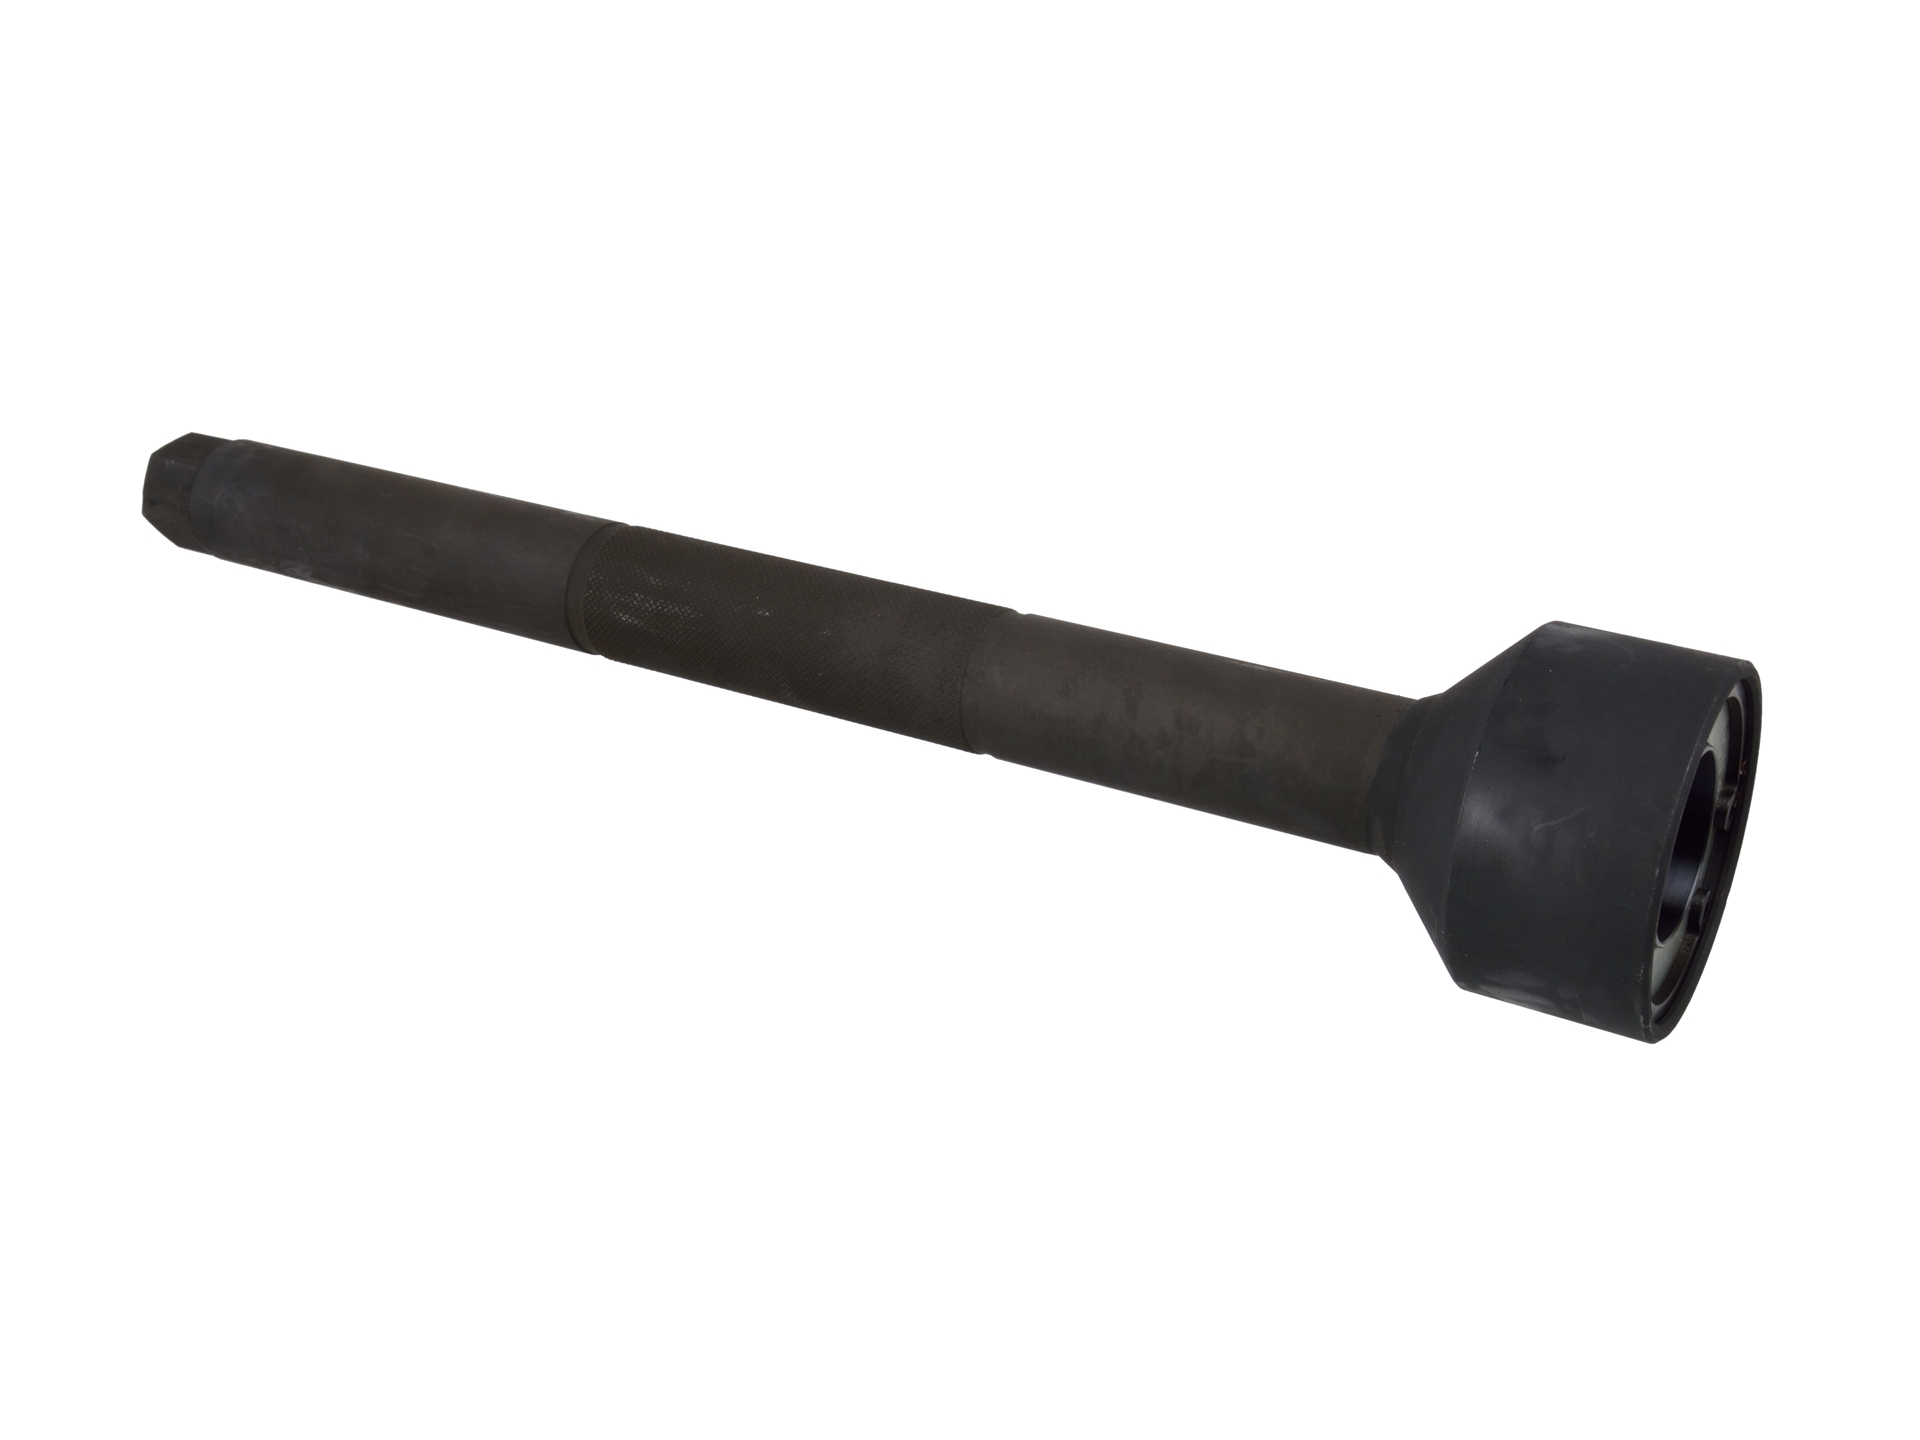 Cheie pentru desurubarea tijelor de directie, 29-34 mm, Geko G02547